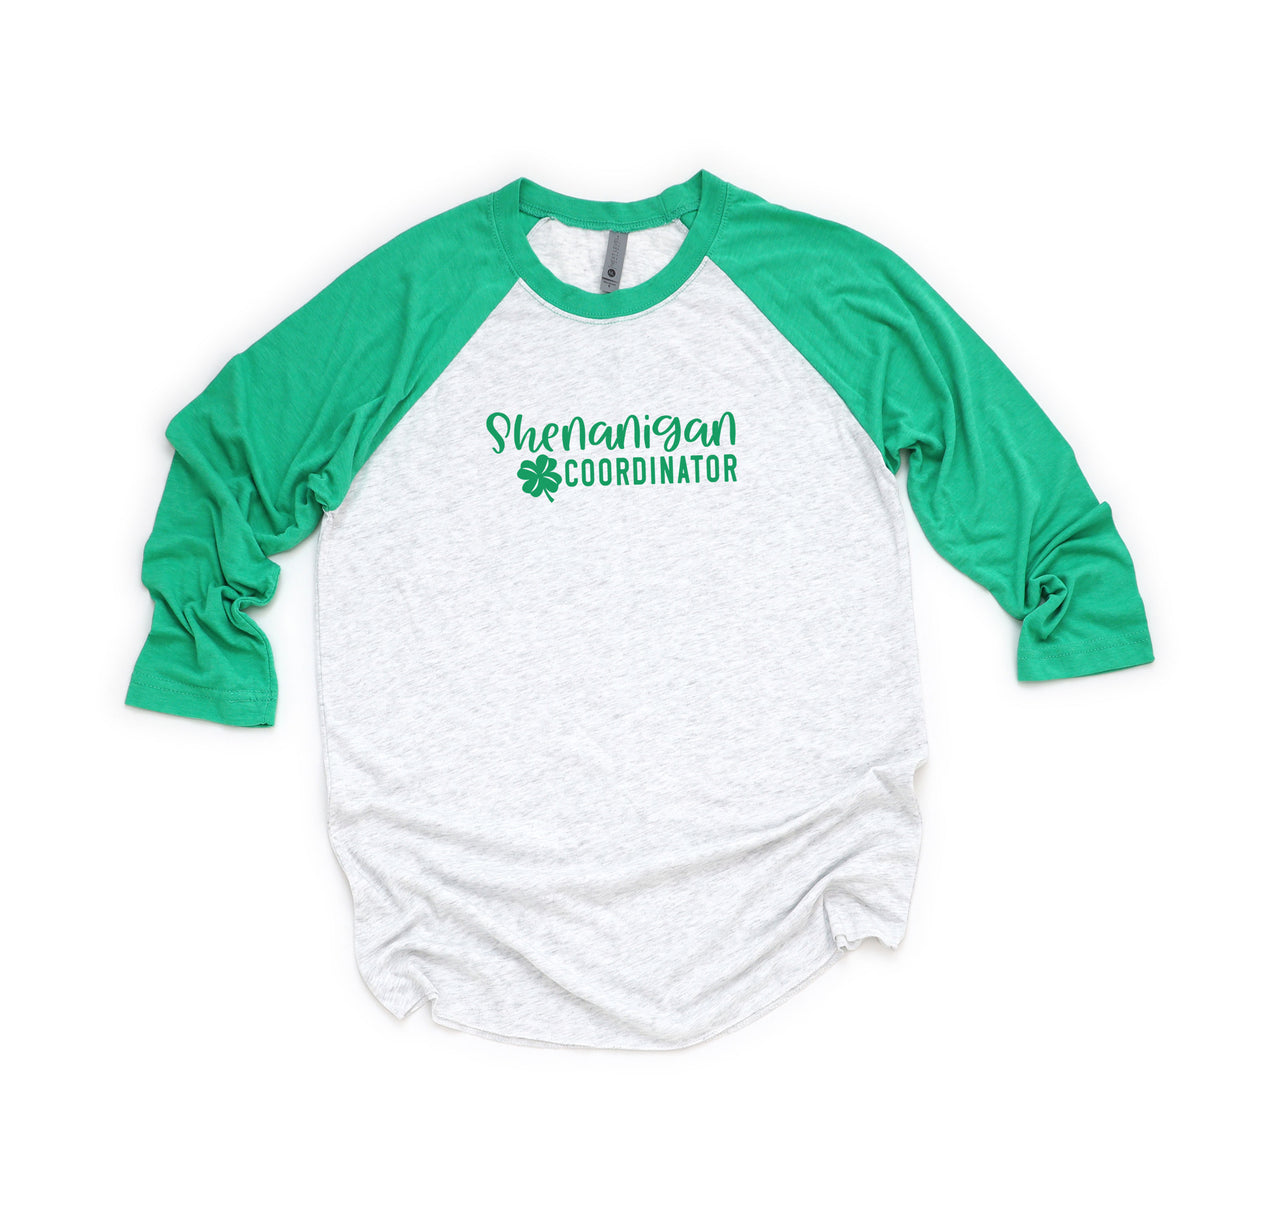 Shenanigan Coordinator Raglan T-Shirt - St. Patrick's Day Baseball Tee Shirt